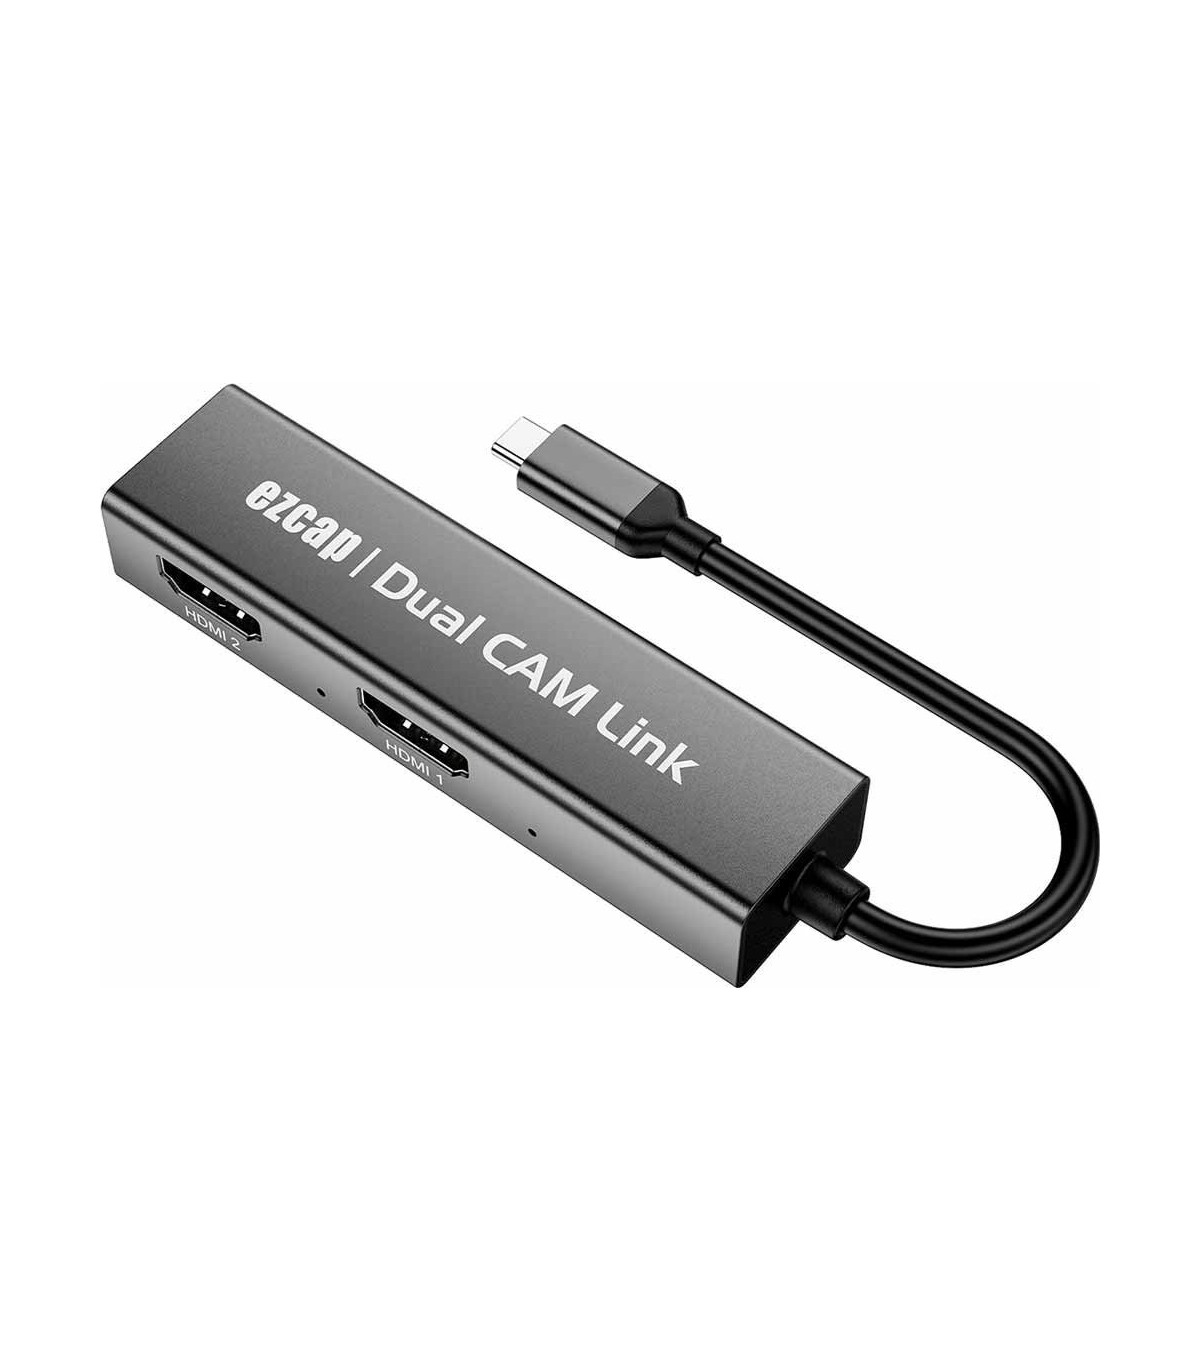 ezcap316 Dual CamLink Plus USB3.0 OR USB-C Capture Card Without